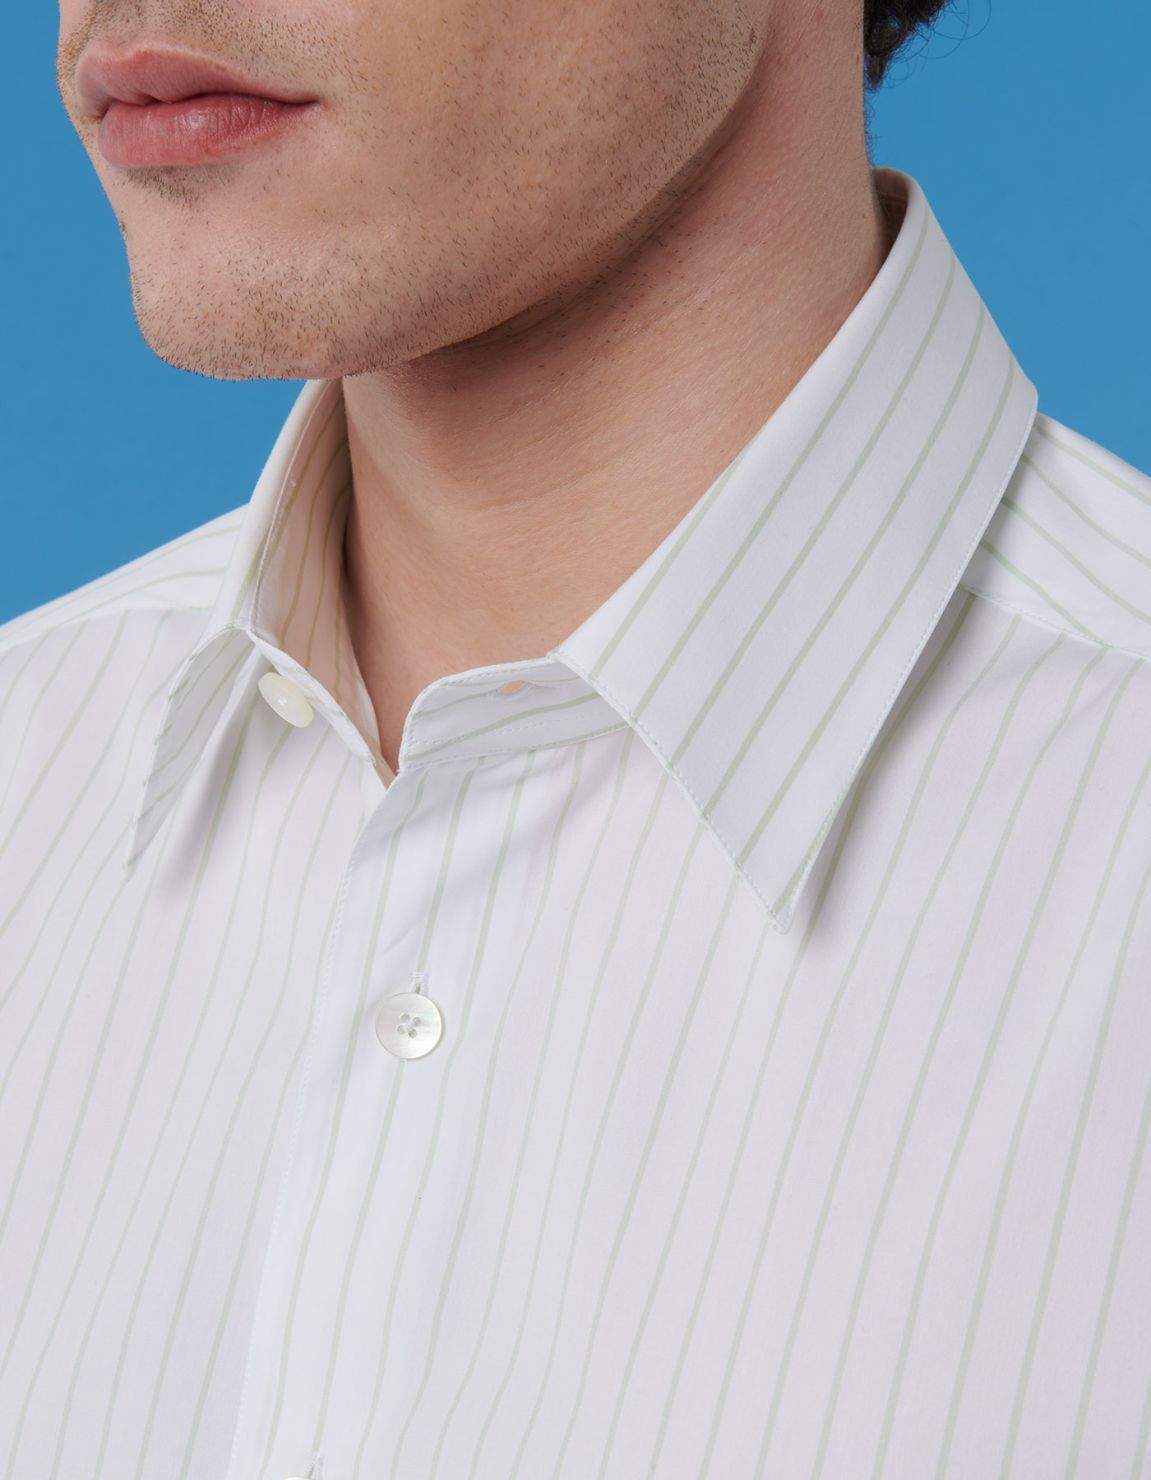 Green Poplin Stripe Shirt Collar spread Evolution Classic Fit 2